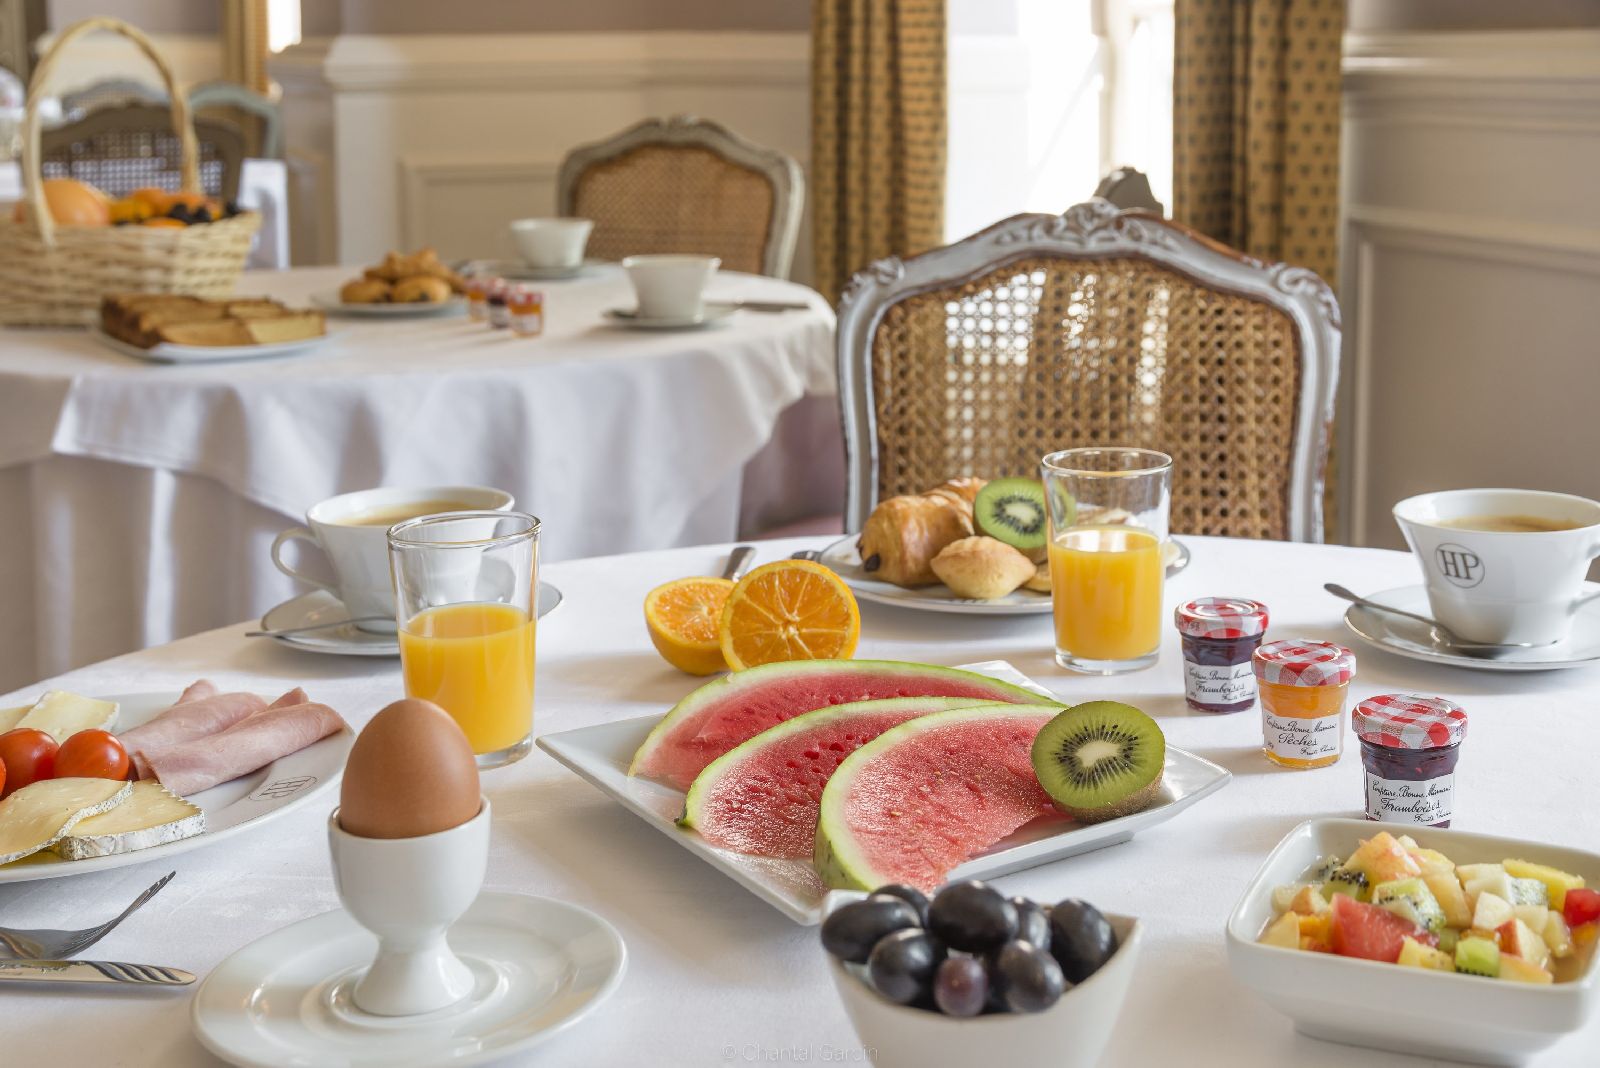 golf-expedition-golf-reizen-frankrijk-regio-bougogne-hotel-de-la-poste-ontbijt-ochtend-gezond-fruit-jam